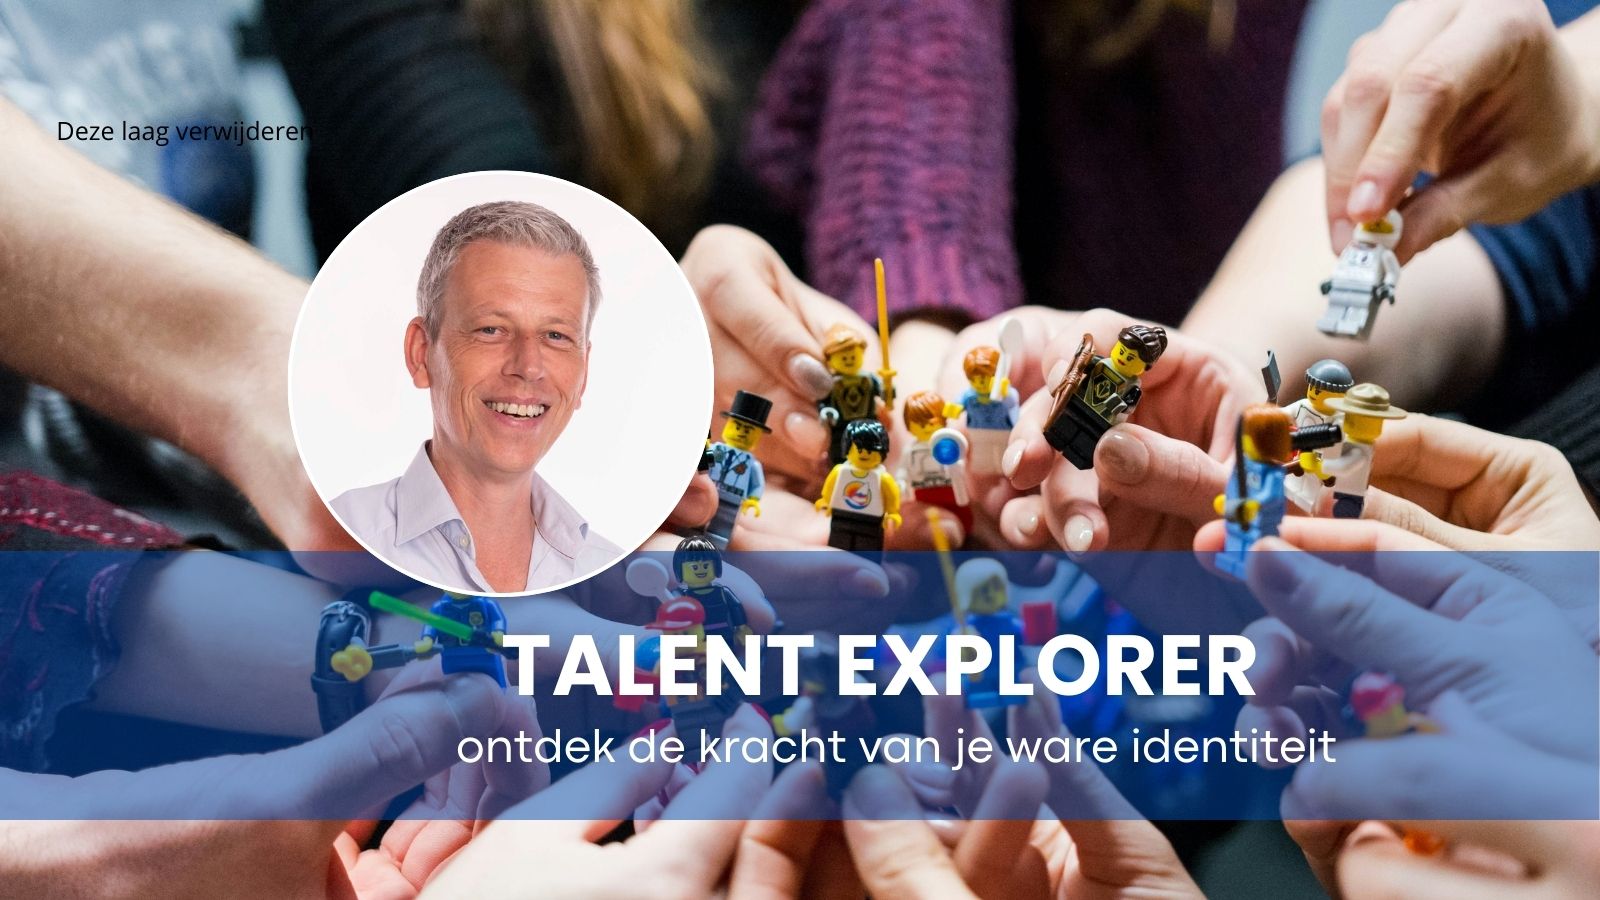 Bedrijfsuitje Rotterdam: Talent explorer